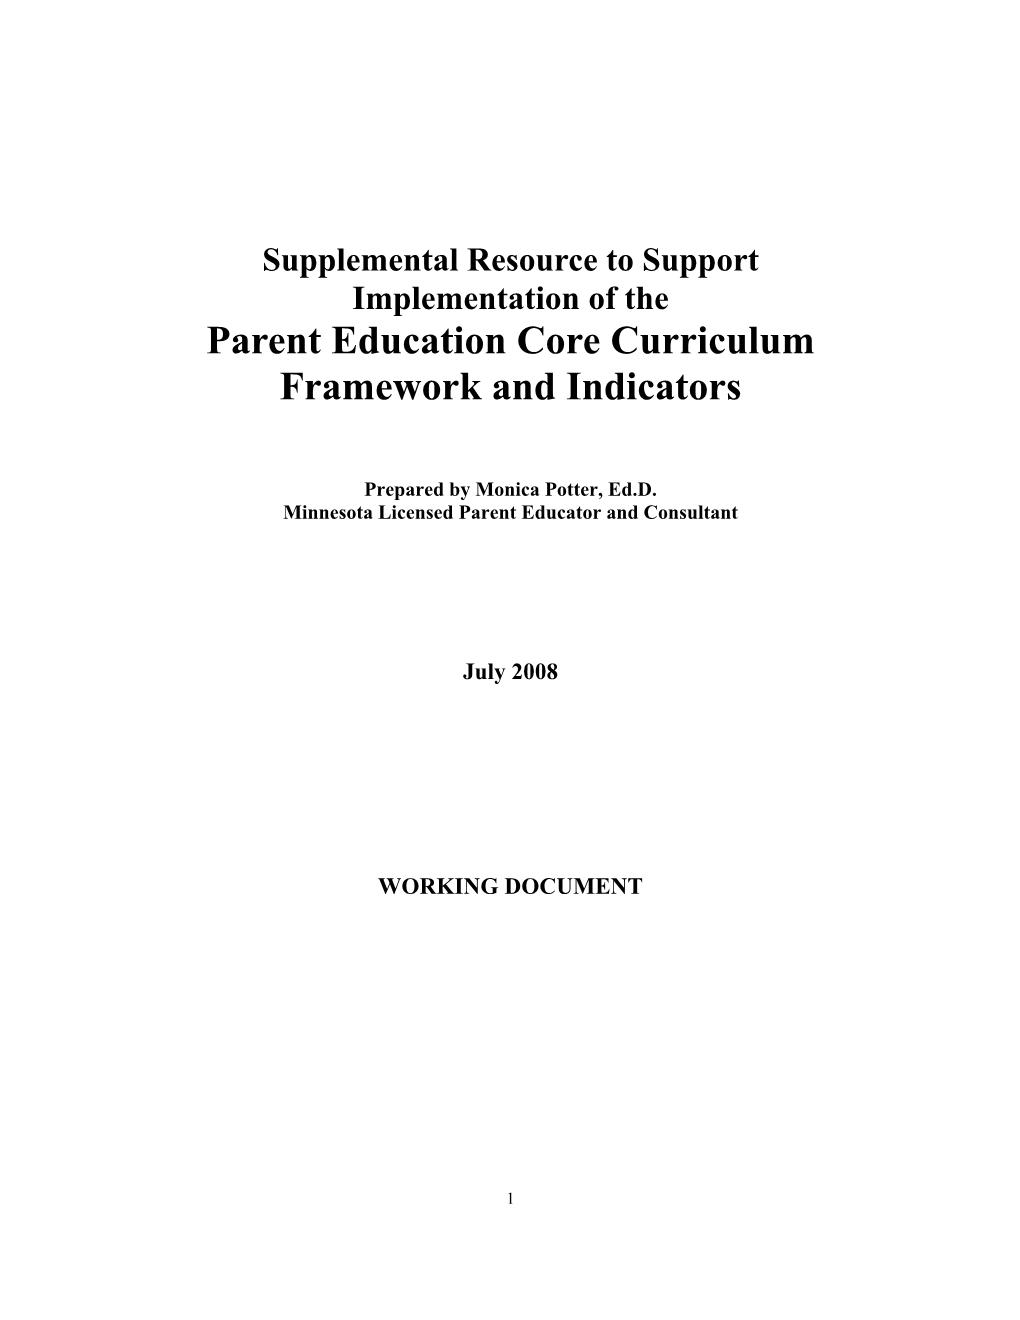 Parent Education Core Curriculum Framework and Indicators